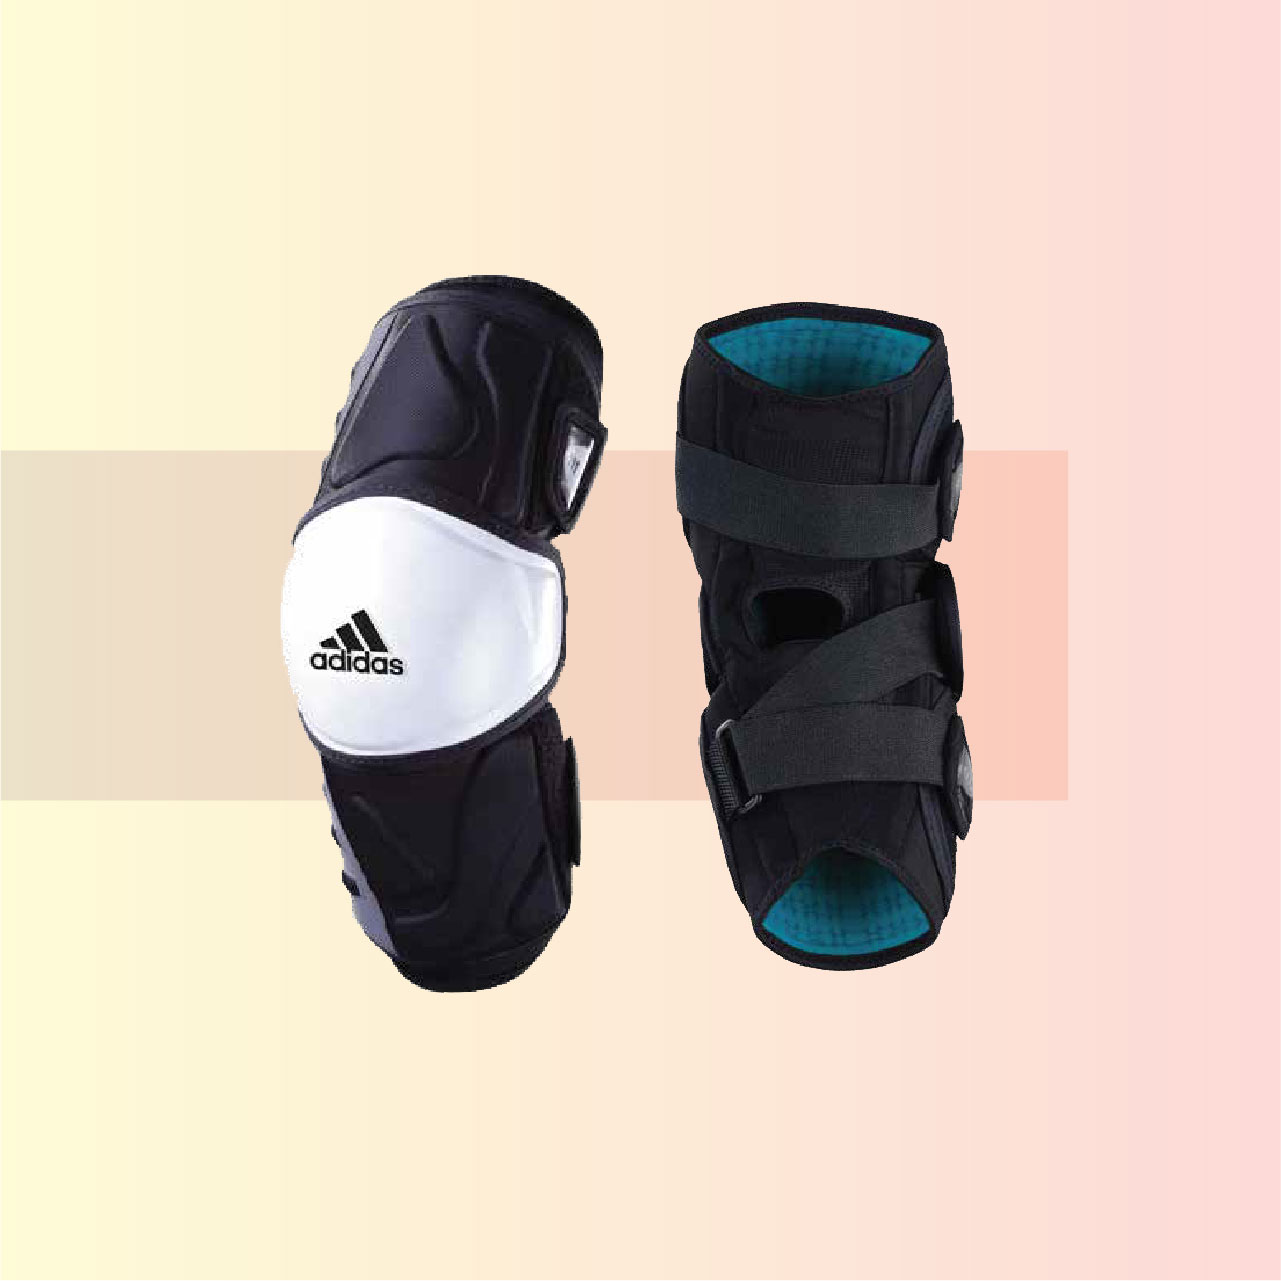 Adidas Lacrosse Gear | Knee Pad Final Product